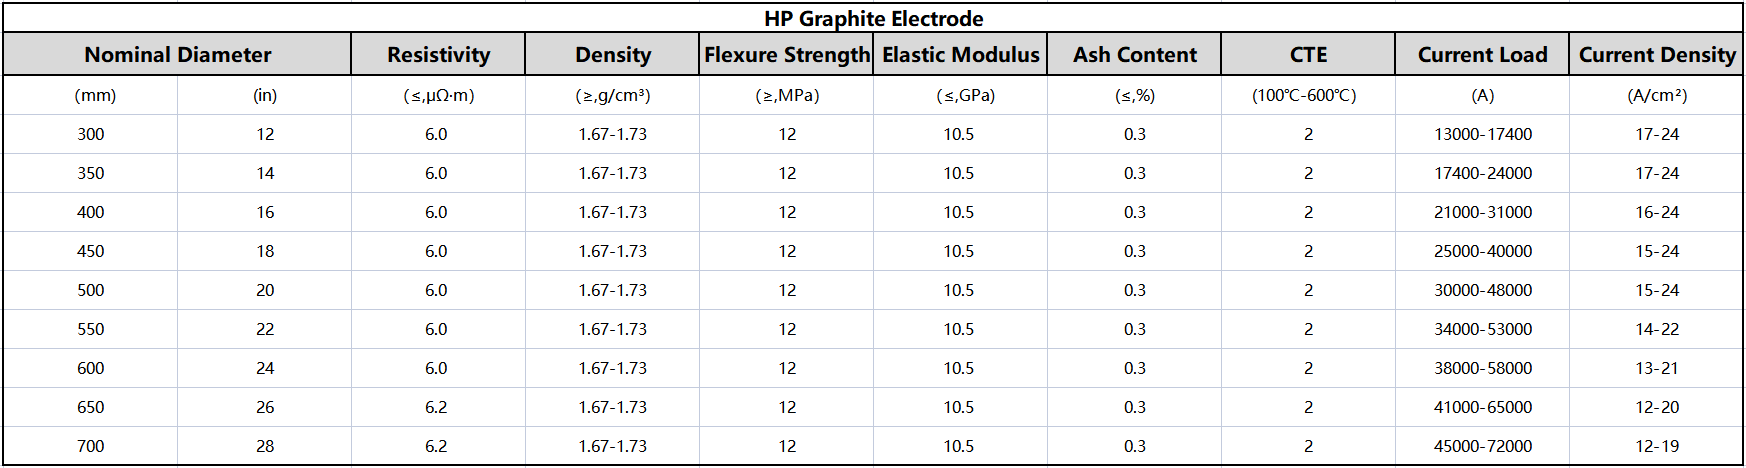 HP Graphite Electrode